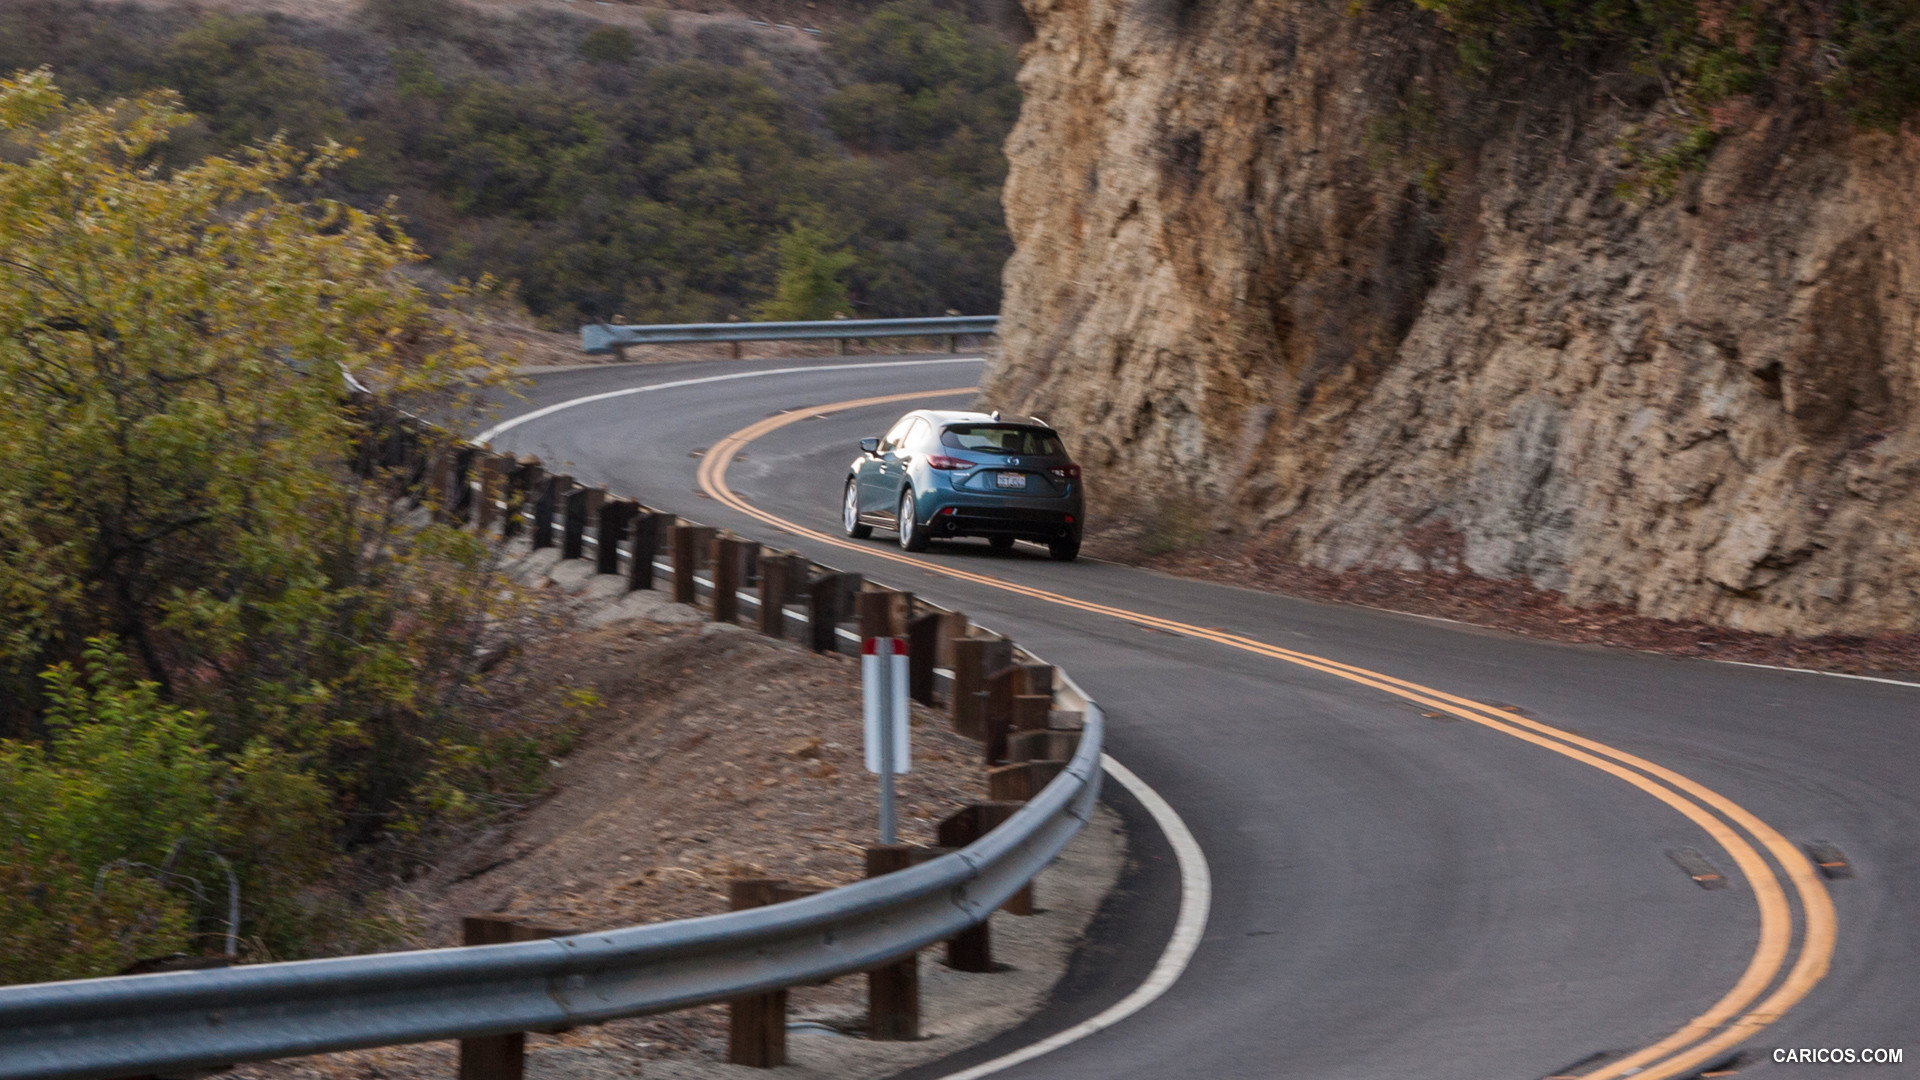 2015 Mazda 3 5D s Touring 6MT (Blue Reflex)  - Rear, #4 of 27